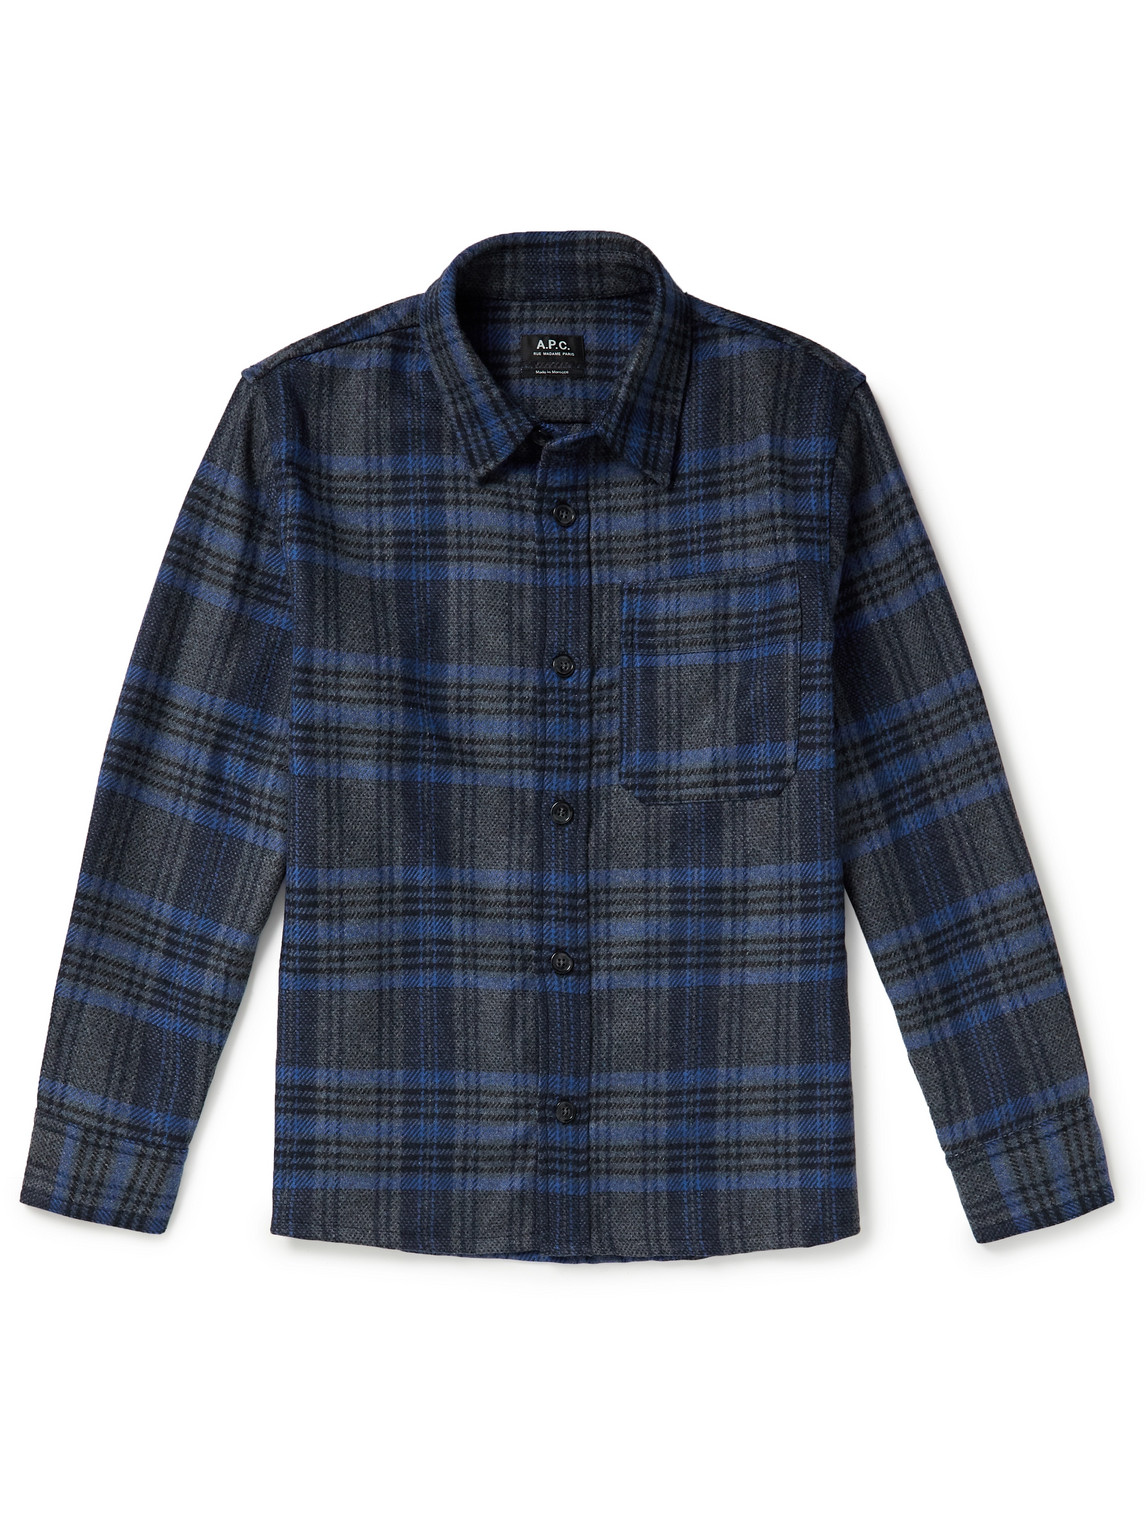 A.P.C. Basile Wool-Blend Flannel Overshirt